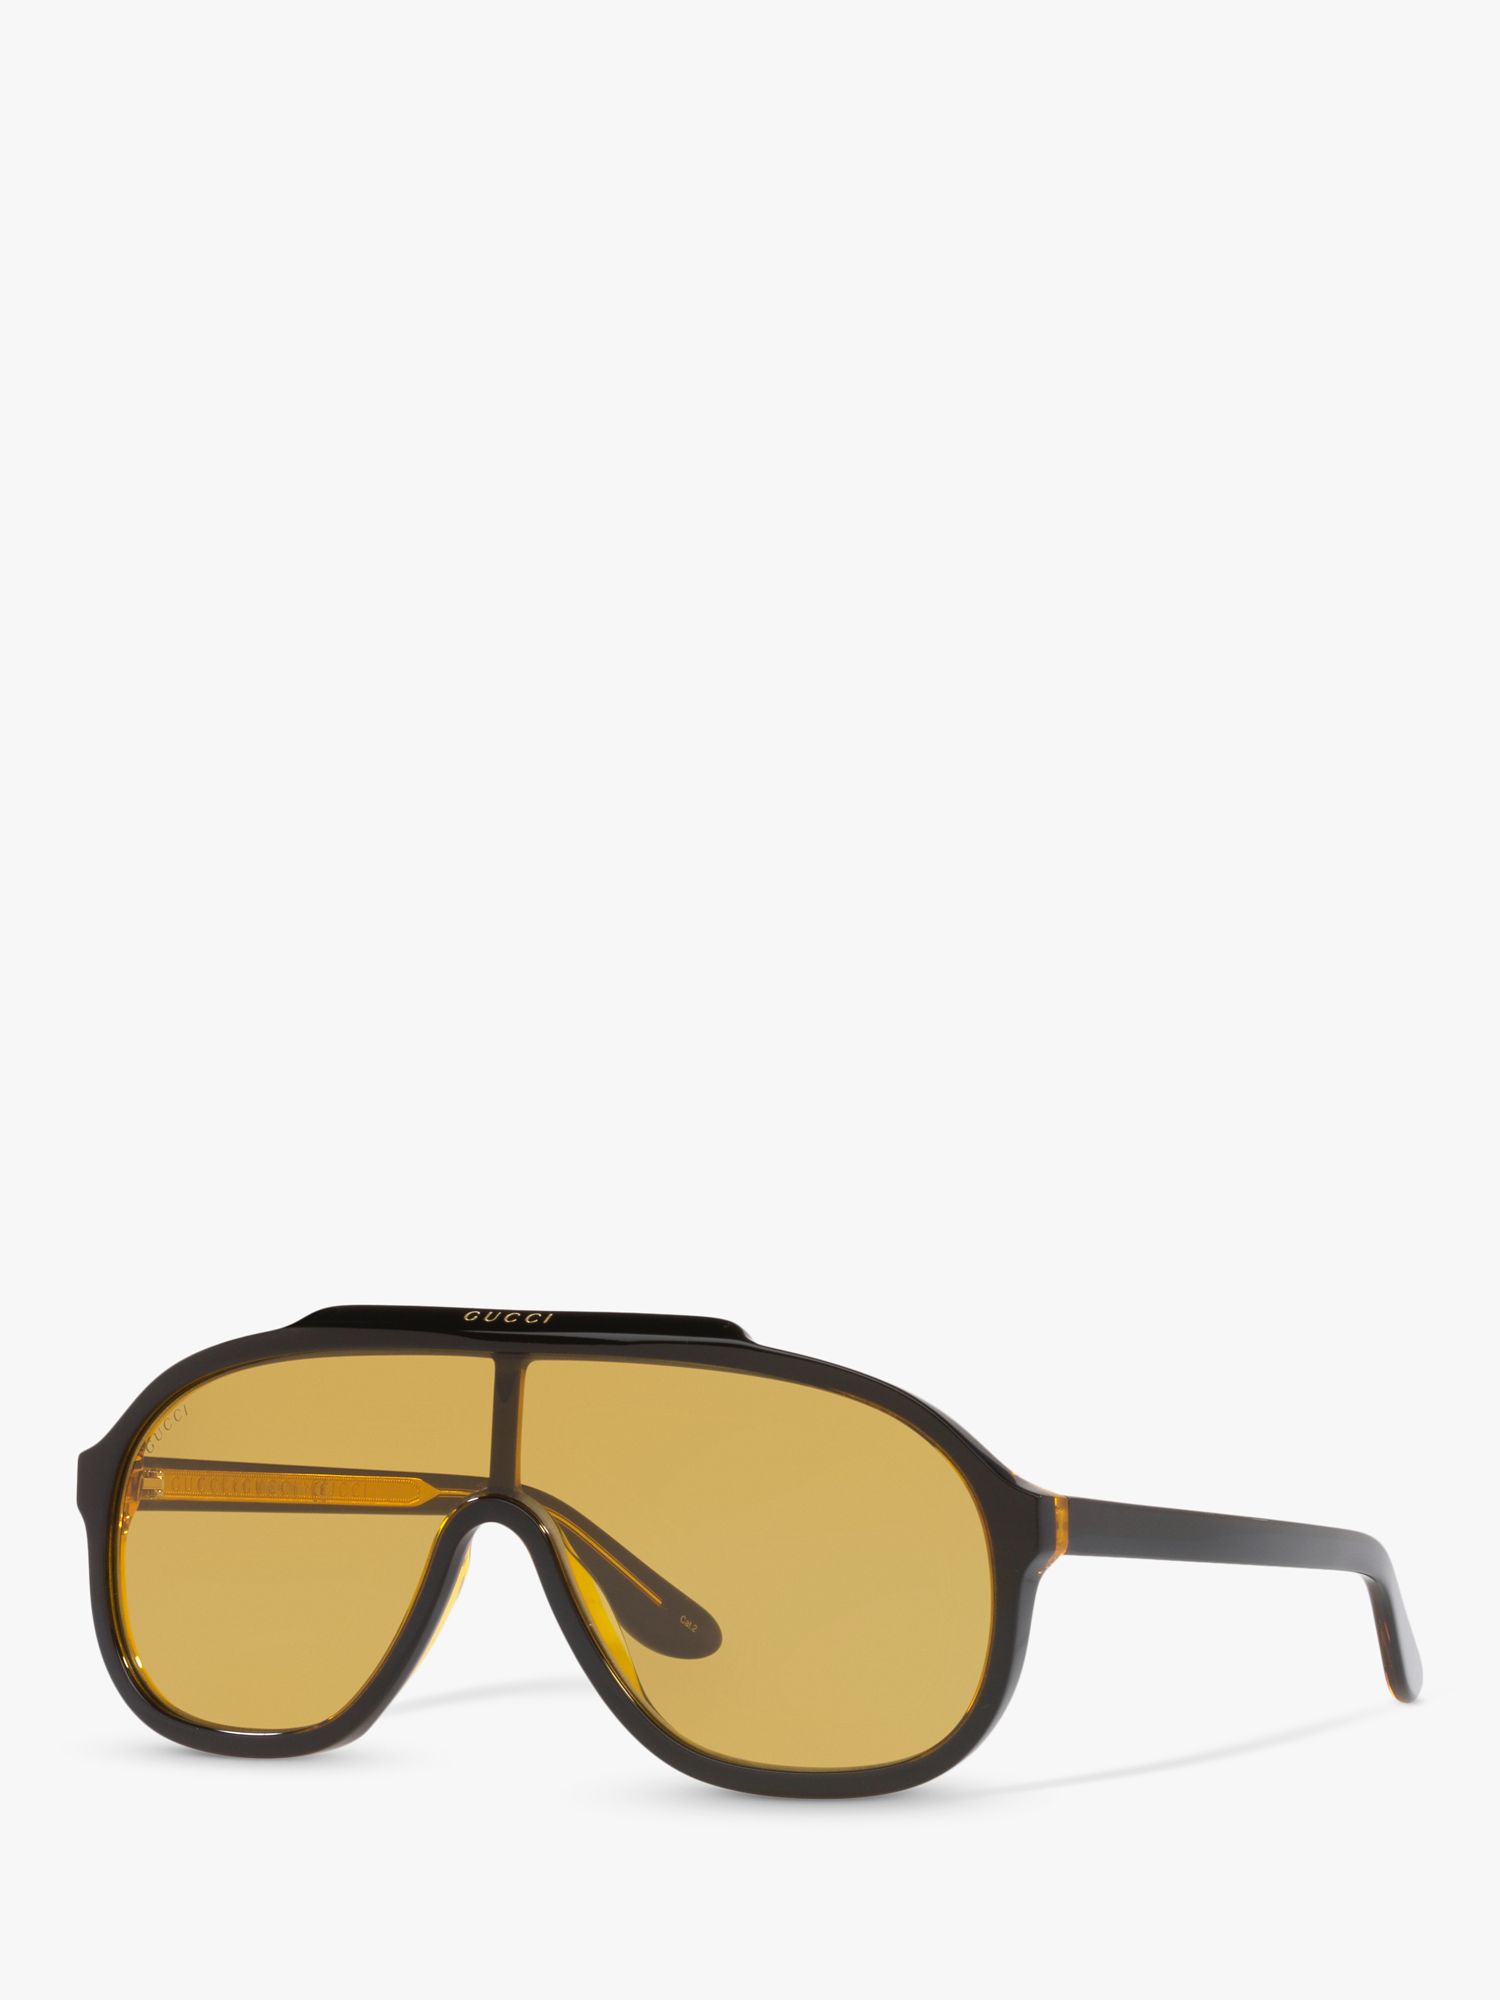 Gucci GG1038S Men's s Pilot Sunglasses, Black/Yellow at John Lewis